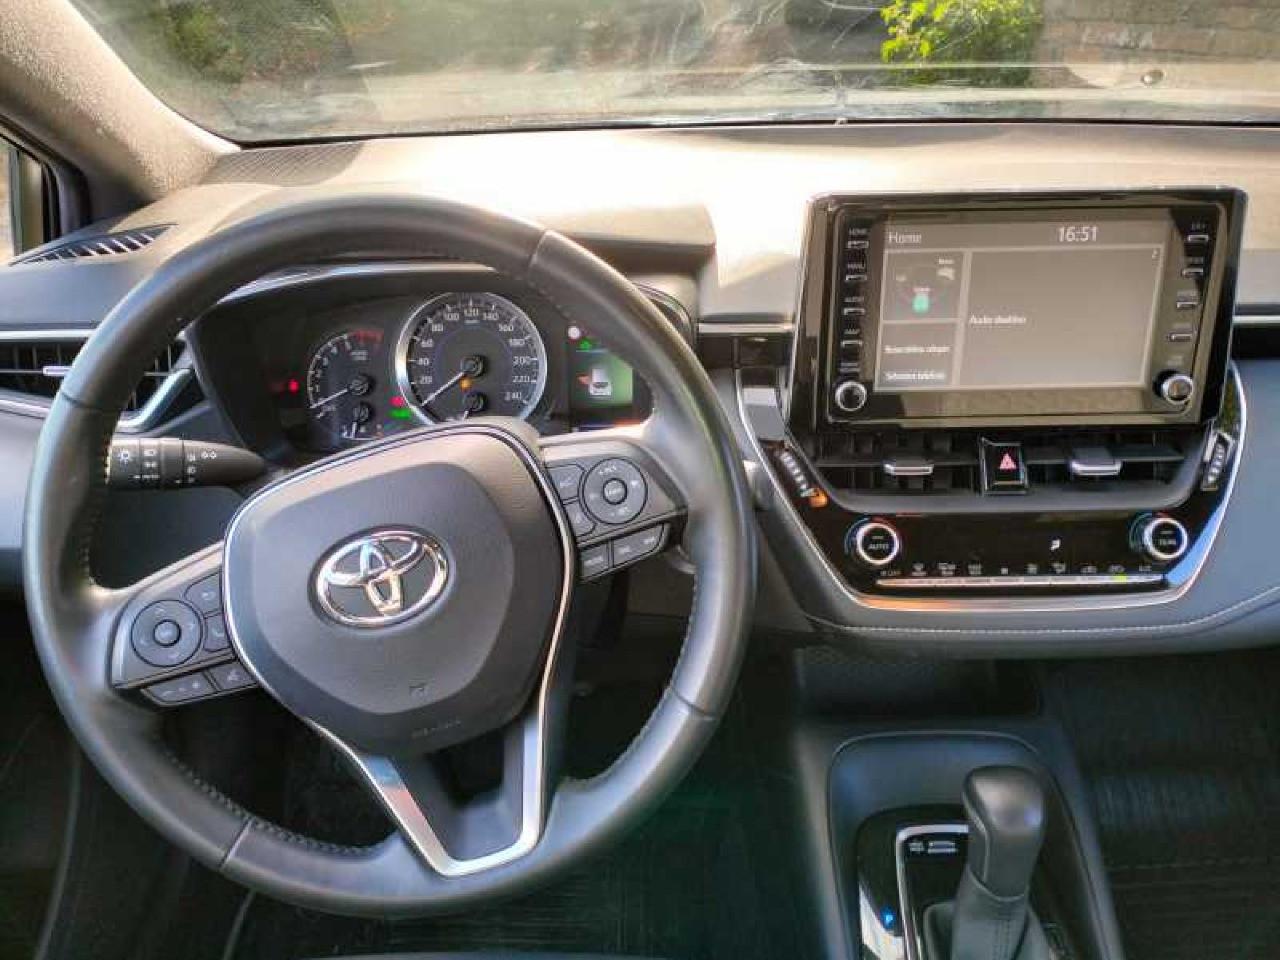 Toyota Corolla 1.8h cvt fULL km 23000